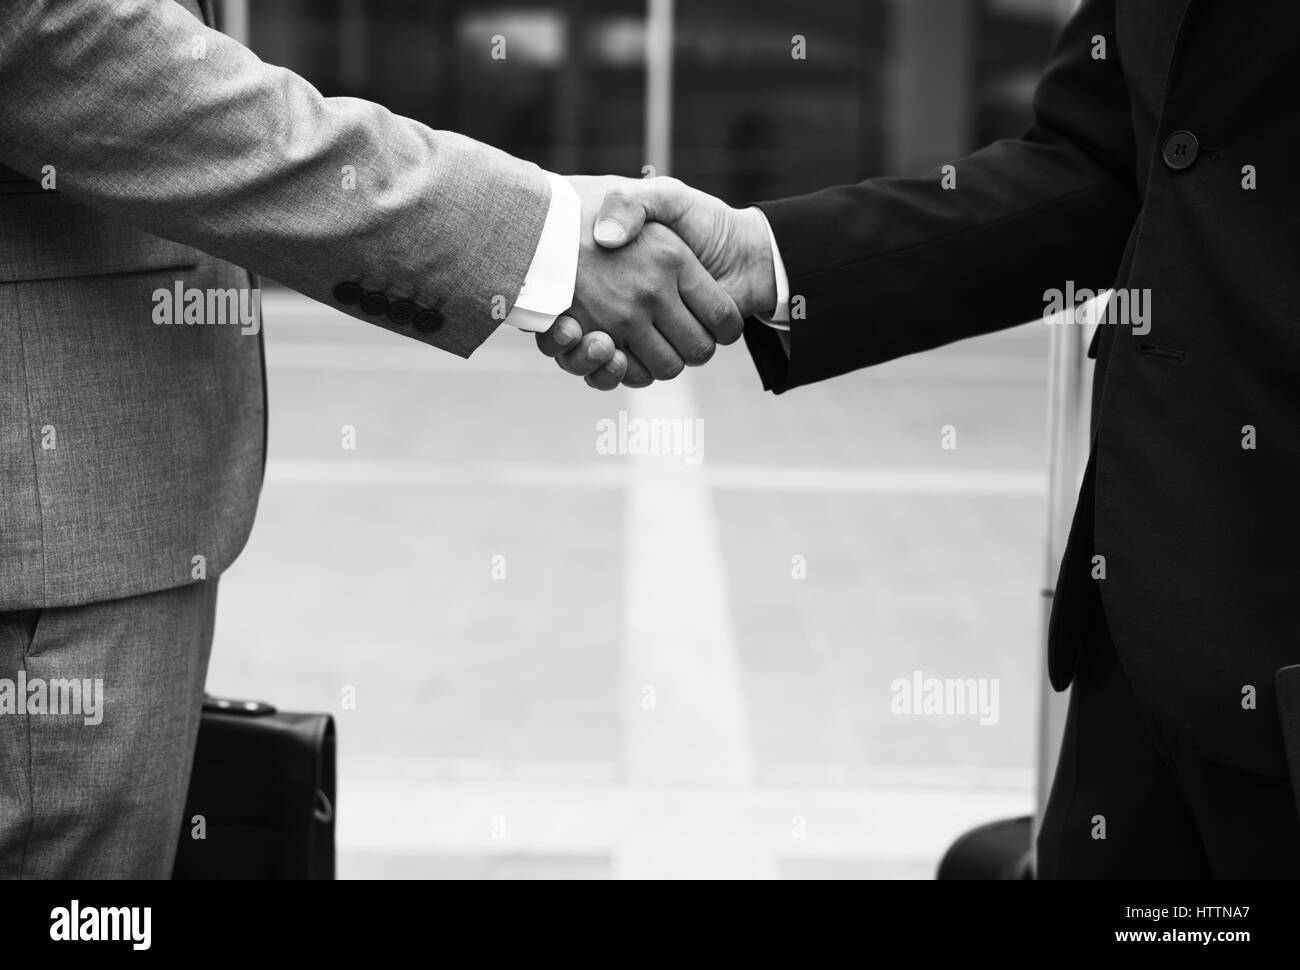 Business Men Agreement Deal Hands Shake Stock Photo